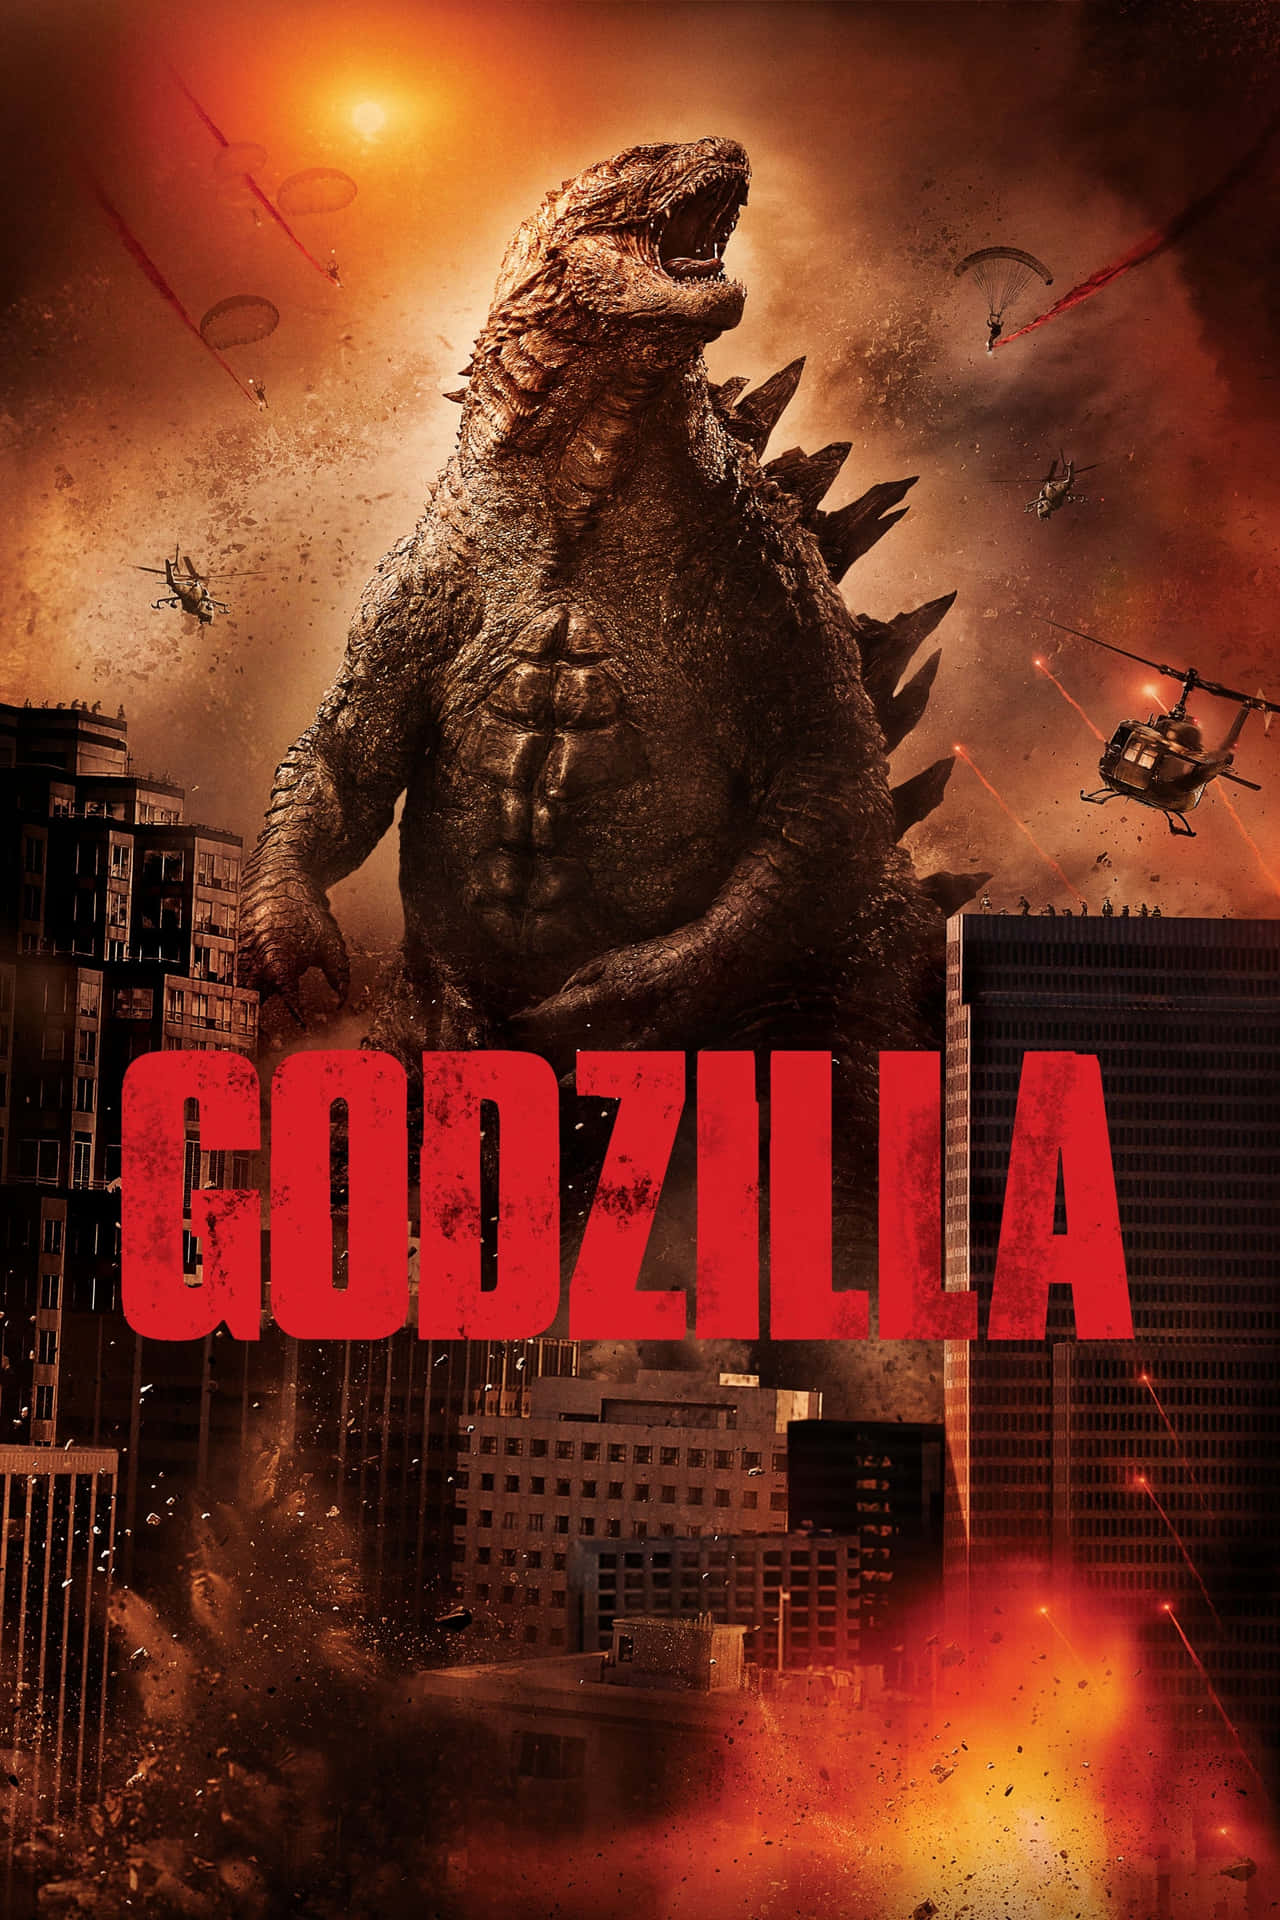 Godzillafilmaffisch I Stadens Bild.